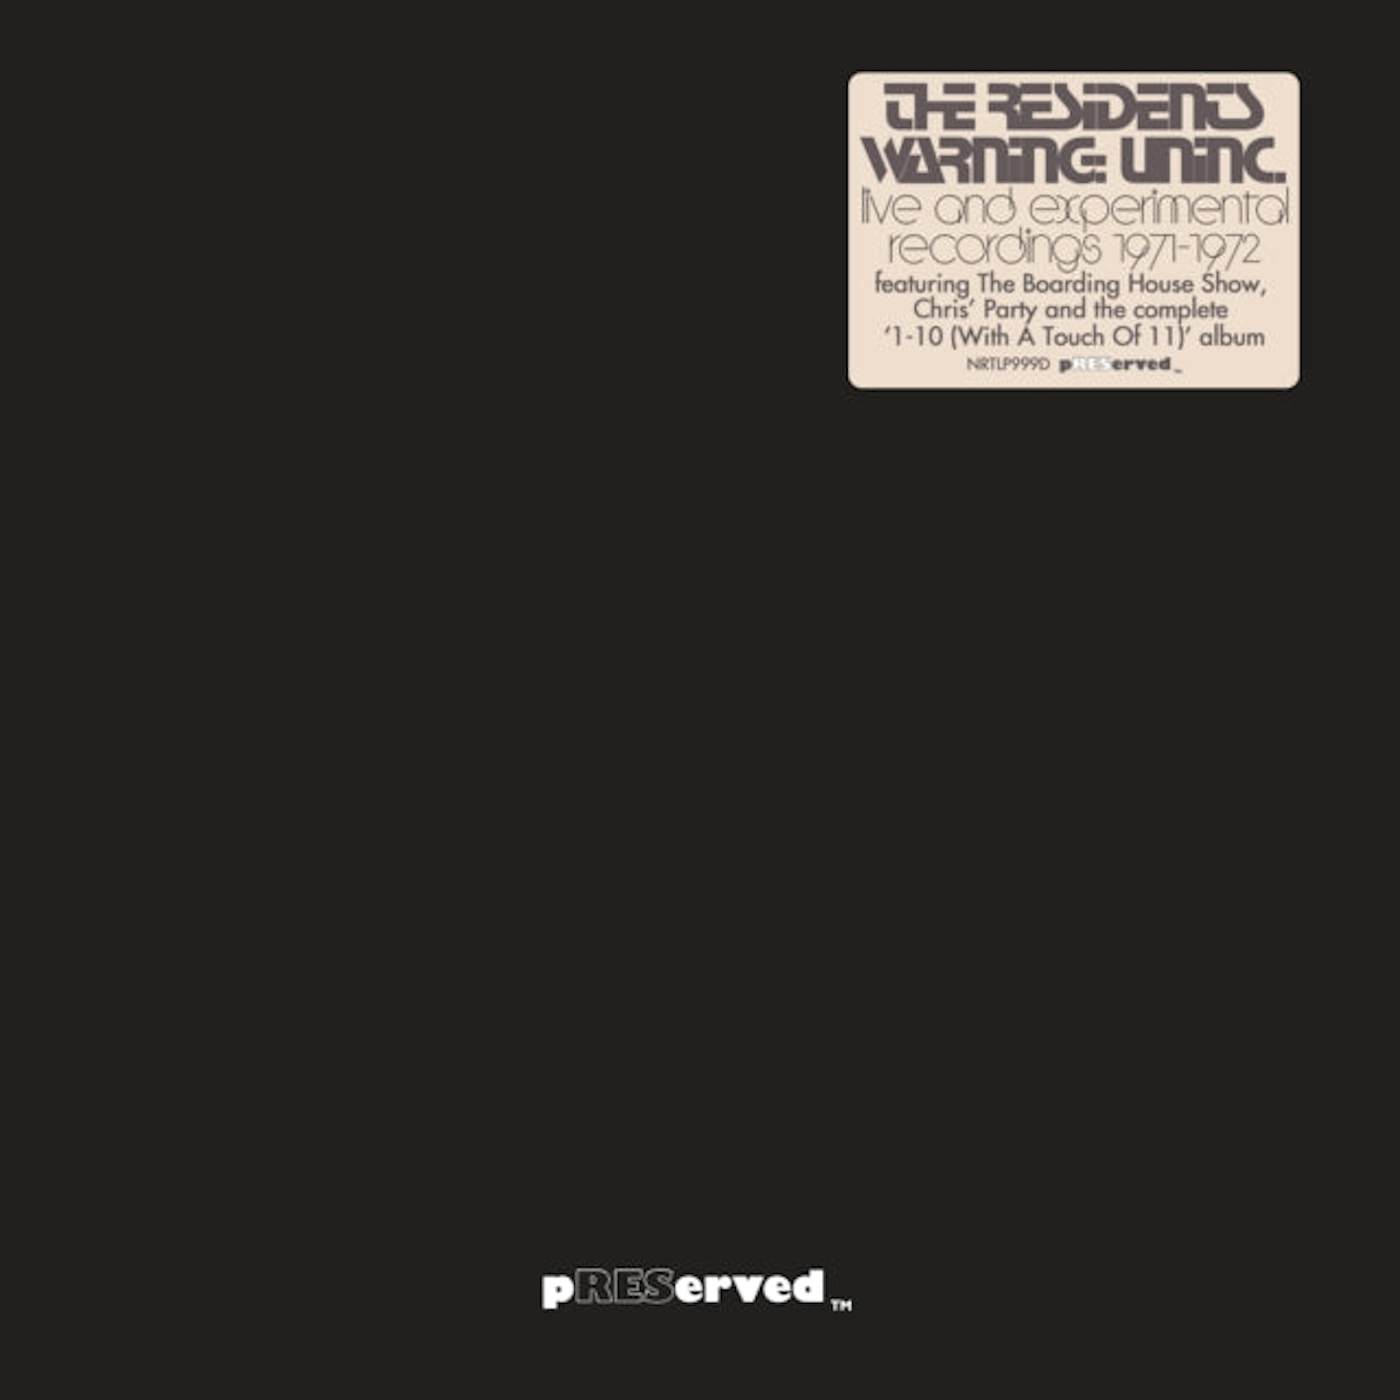 The Residents LP Vinyl Record - Warning: Uninc.: Live & Experimental Recordings 19 71-19 72 (Rsd 20. 22)